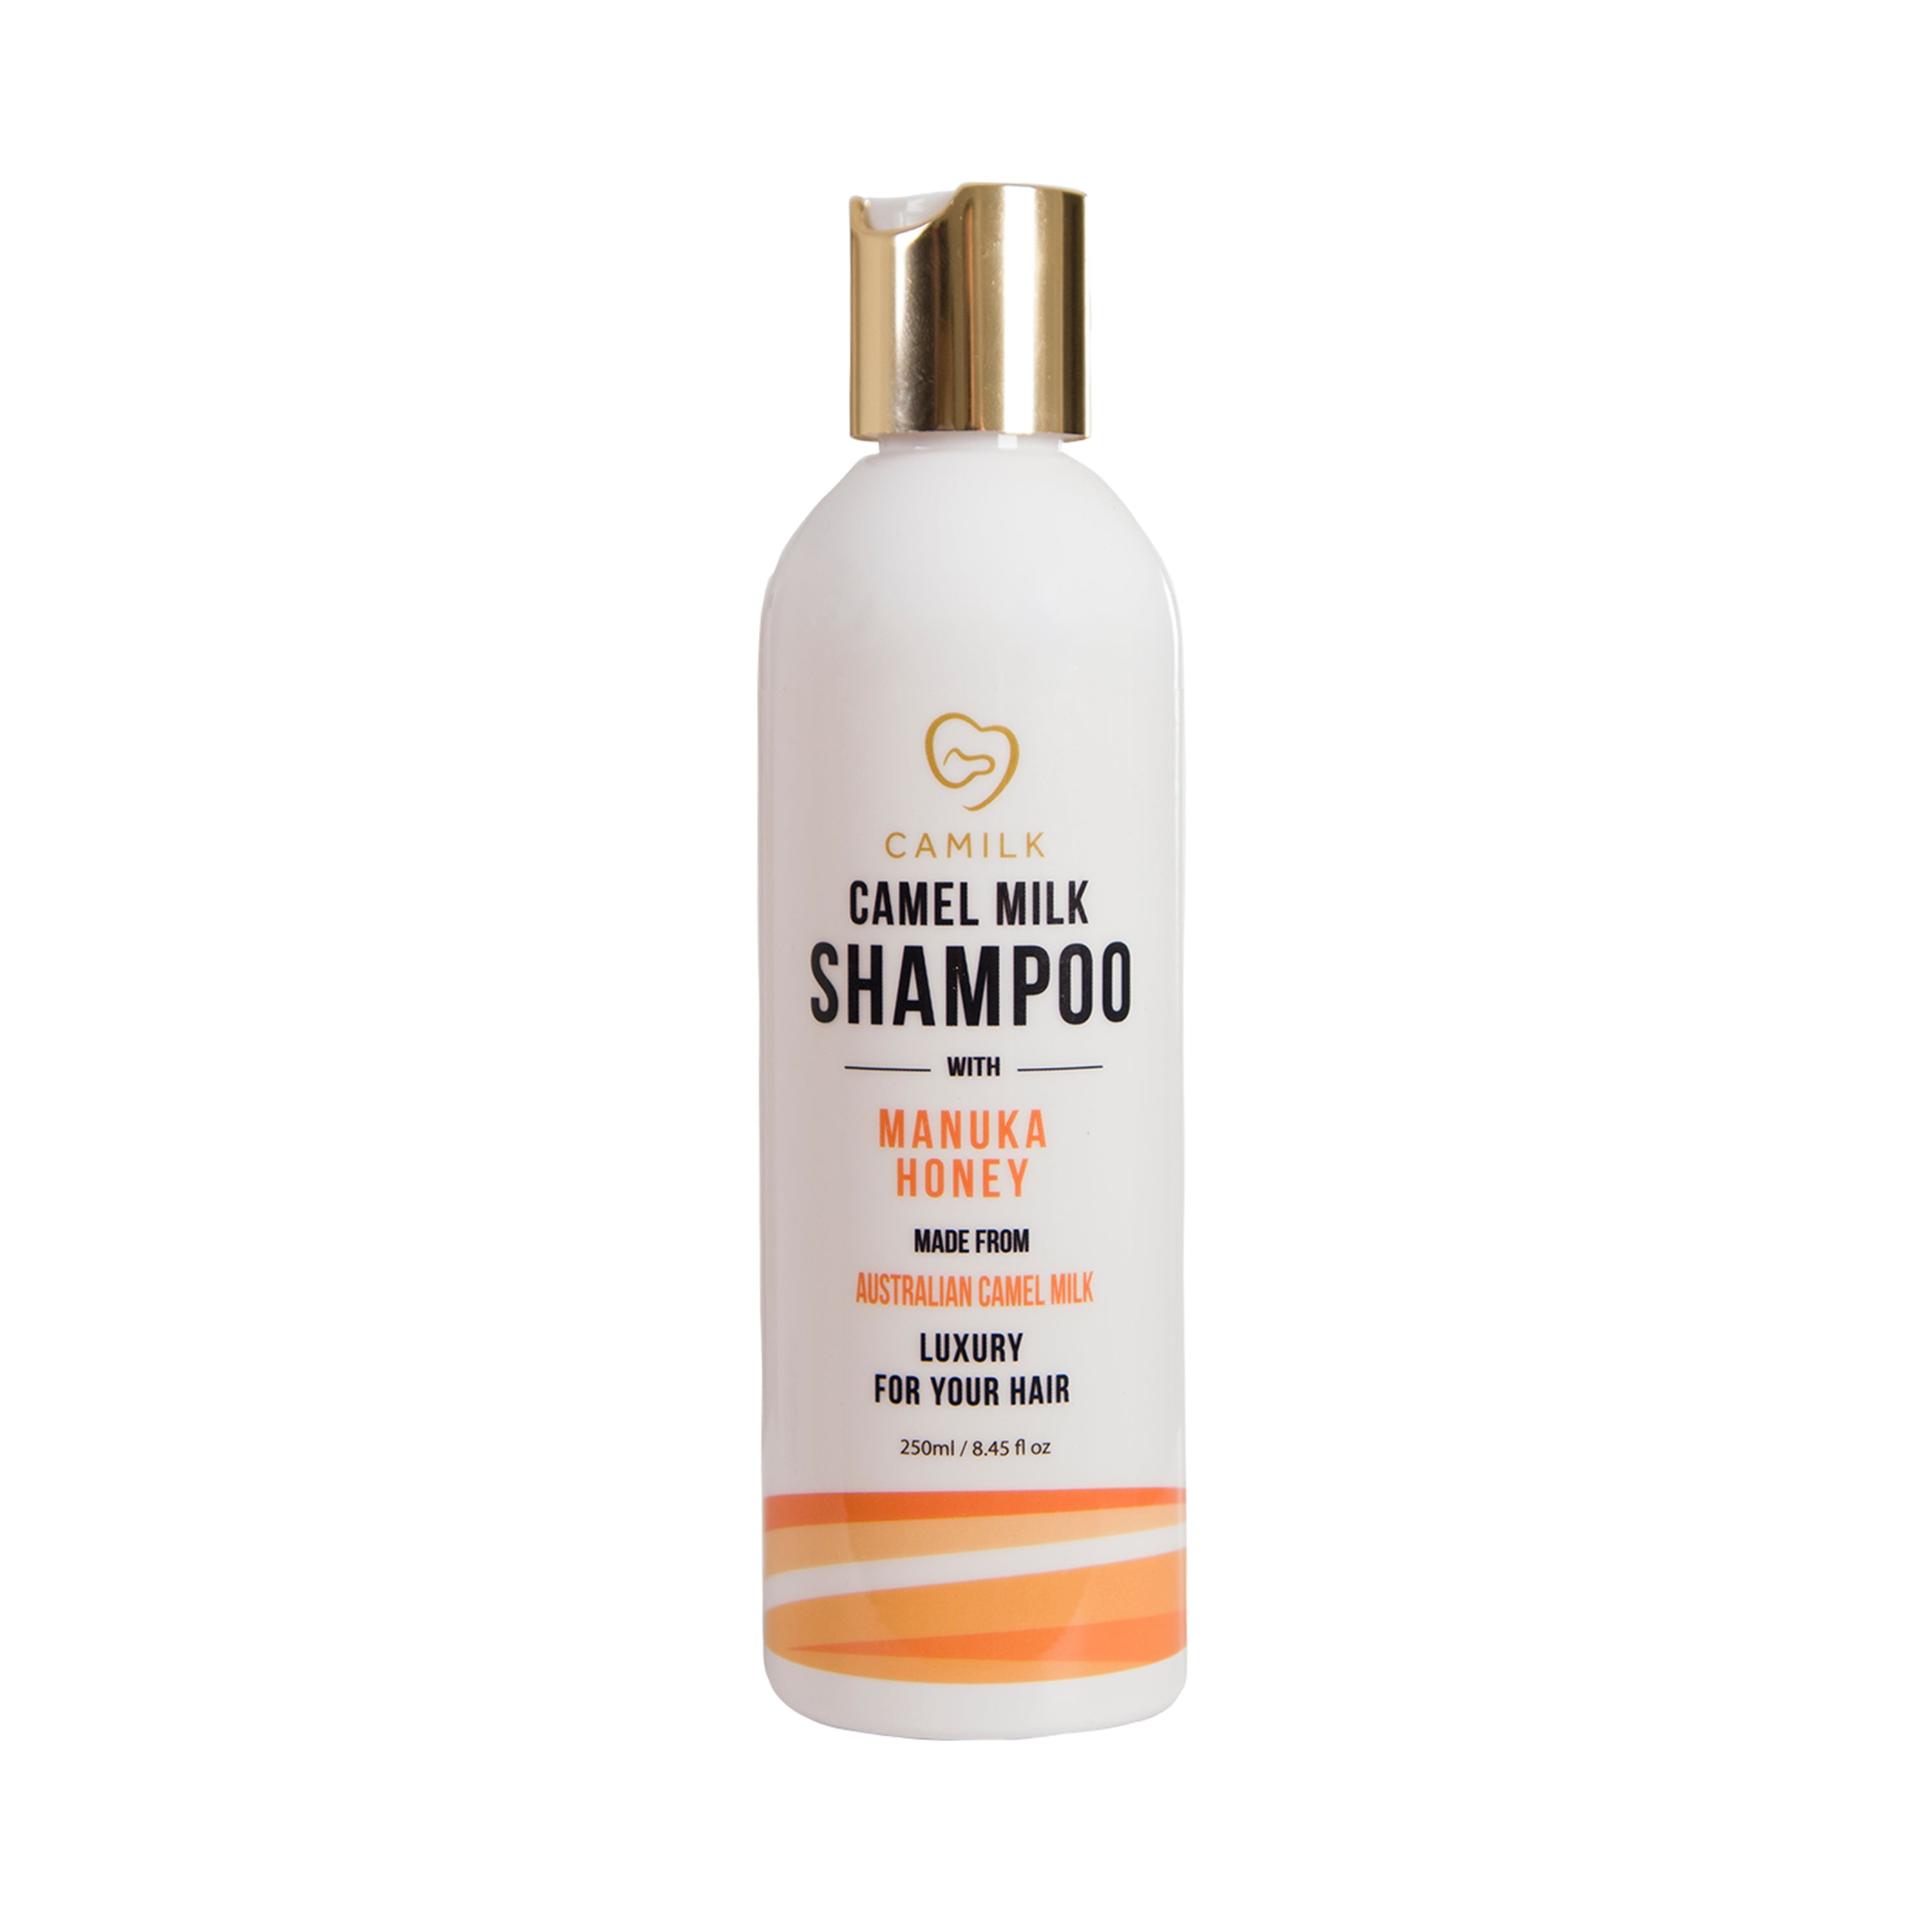 Camilk - Camel Milk Shampoo (250ml)